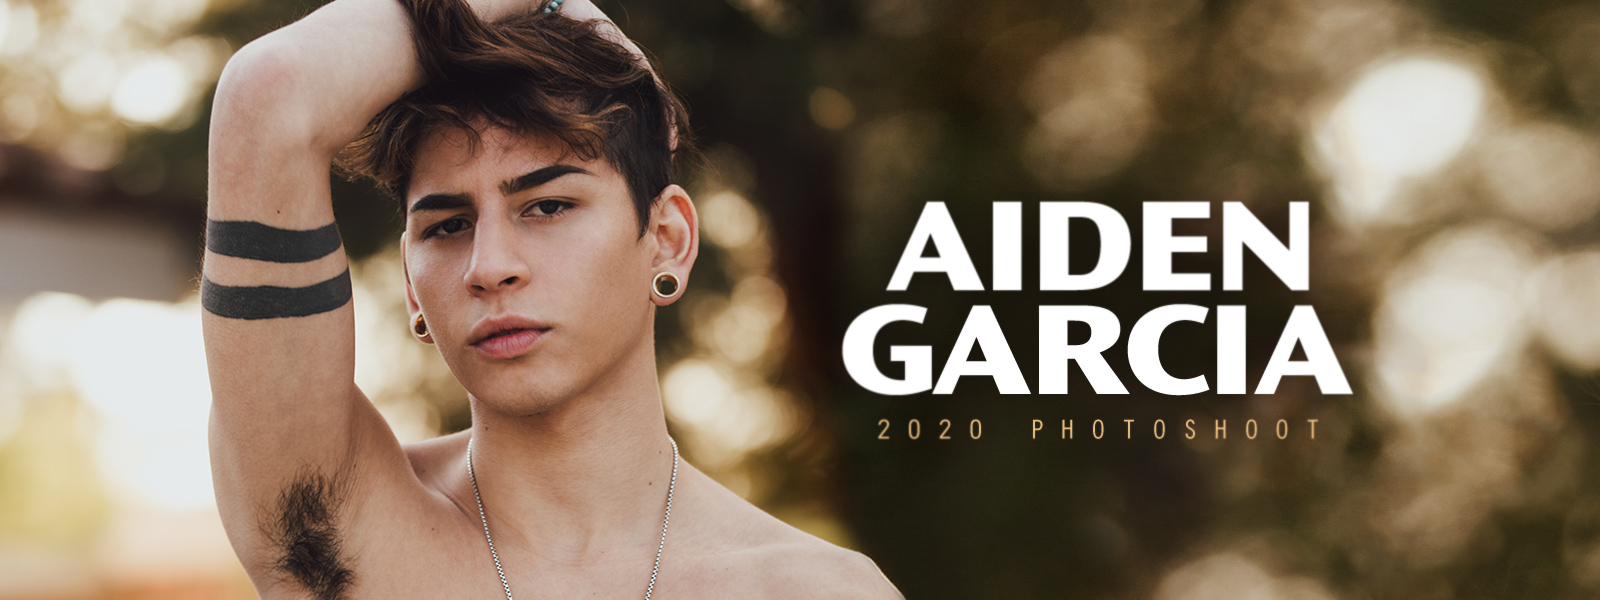 Aiden Garcia 2020 Photoshoot